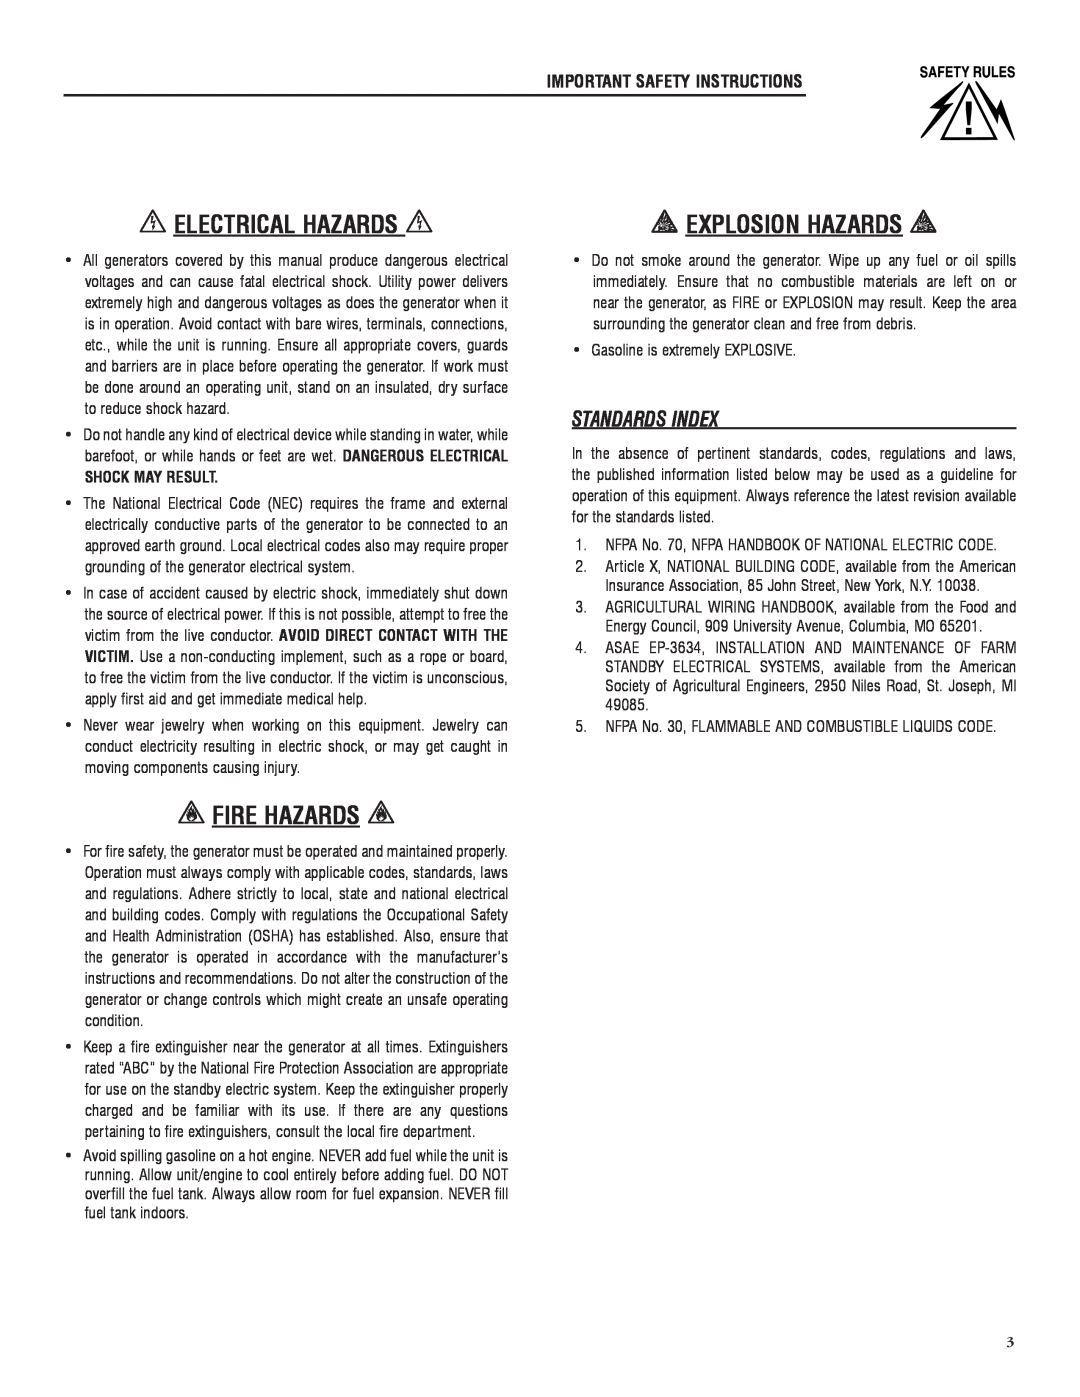 Sears 005734-0 manual  Electrical Hazards ,  Explosion Hazards ,  Fire Hazards , Standards Index, Shock May Result 